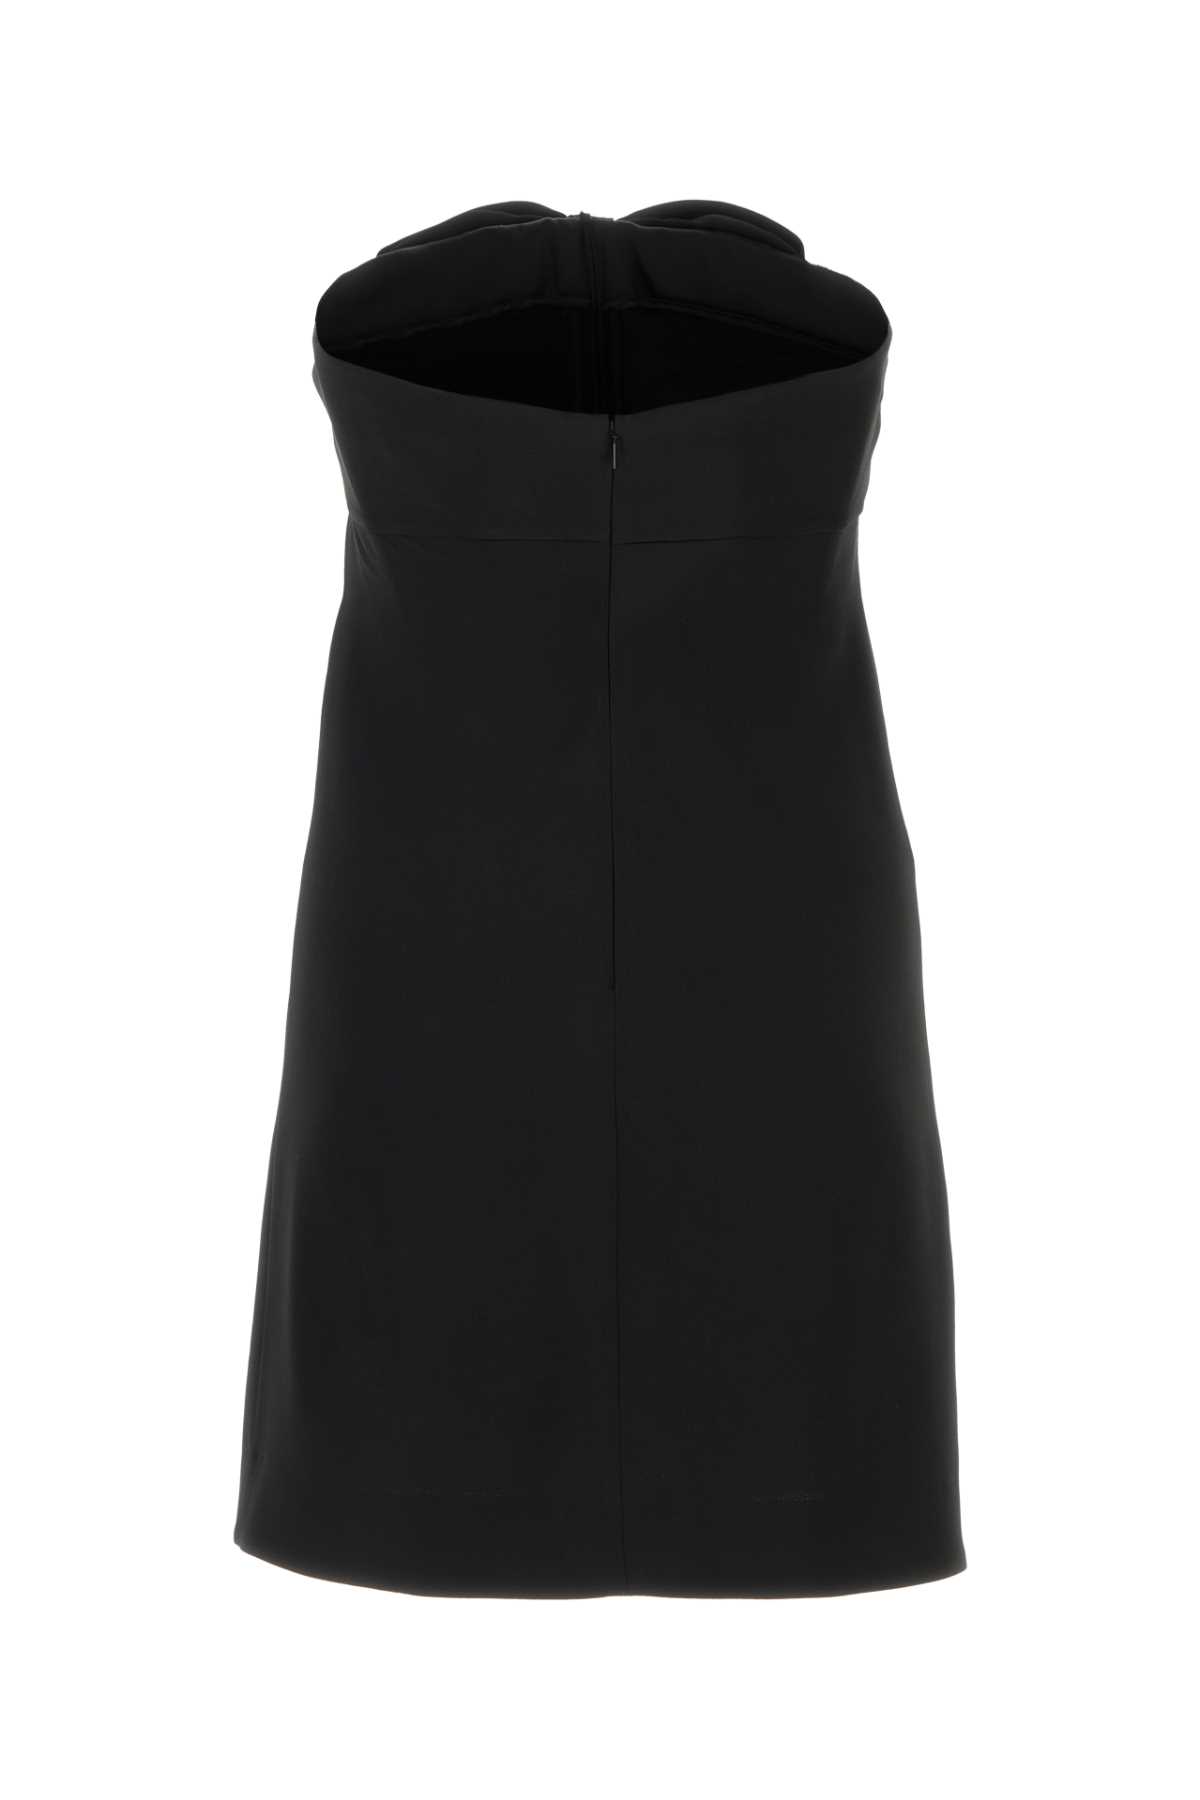 Saint Laurent Black Satin Mini Dress In 1000